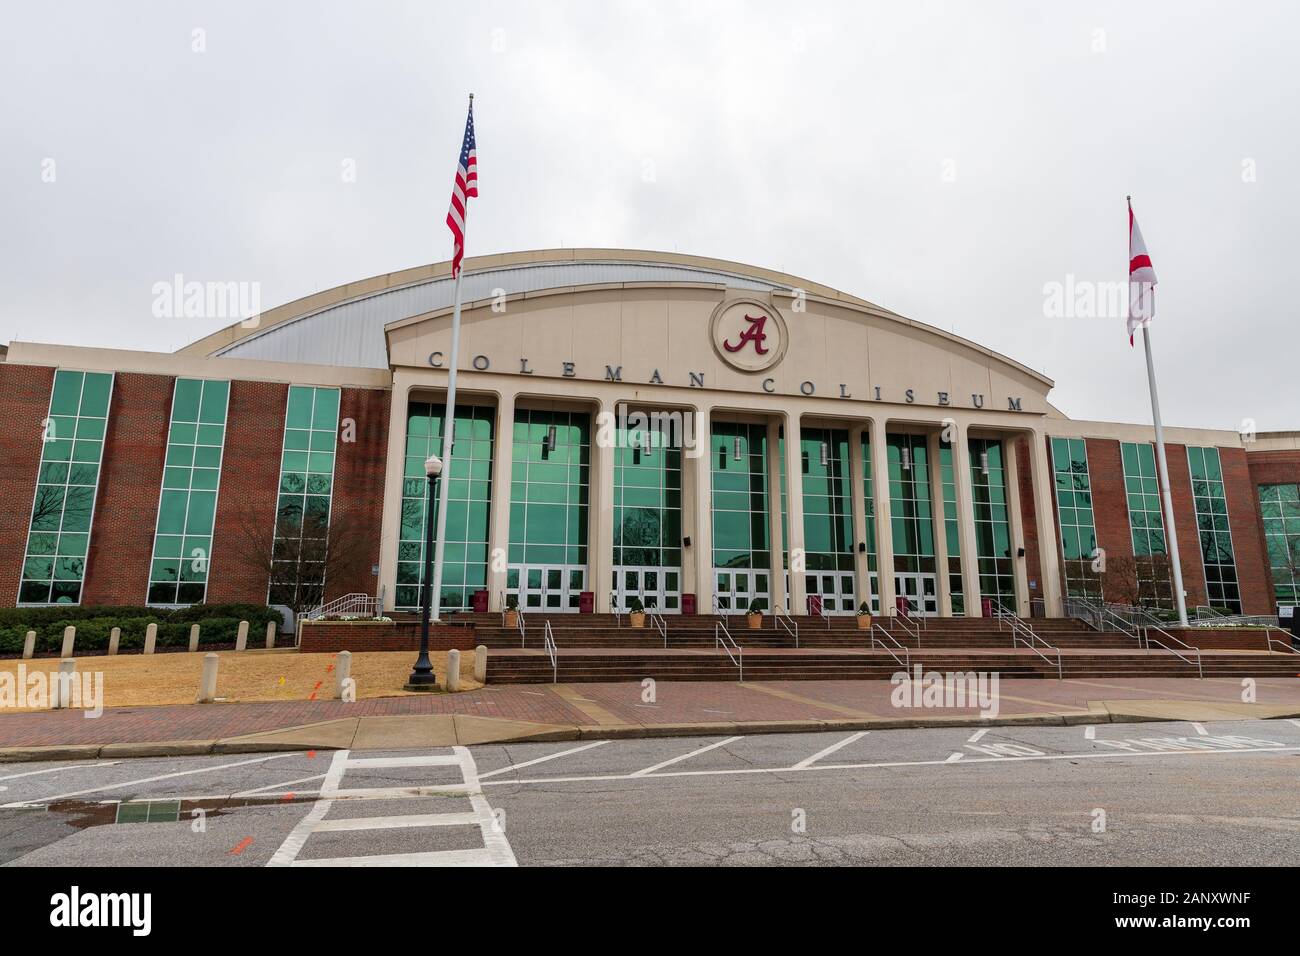 Tuscaloosa, AL / USA - December 29, 2019: Coleman Coliseum on the Campus of the University of Alabama Stock Photo